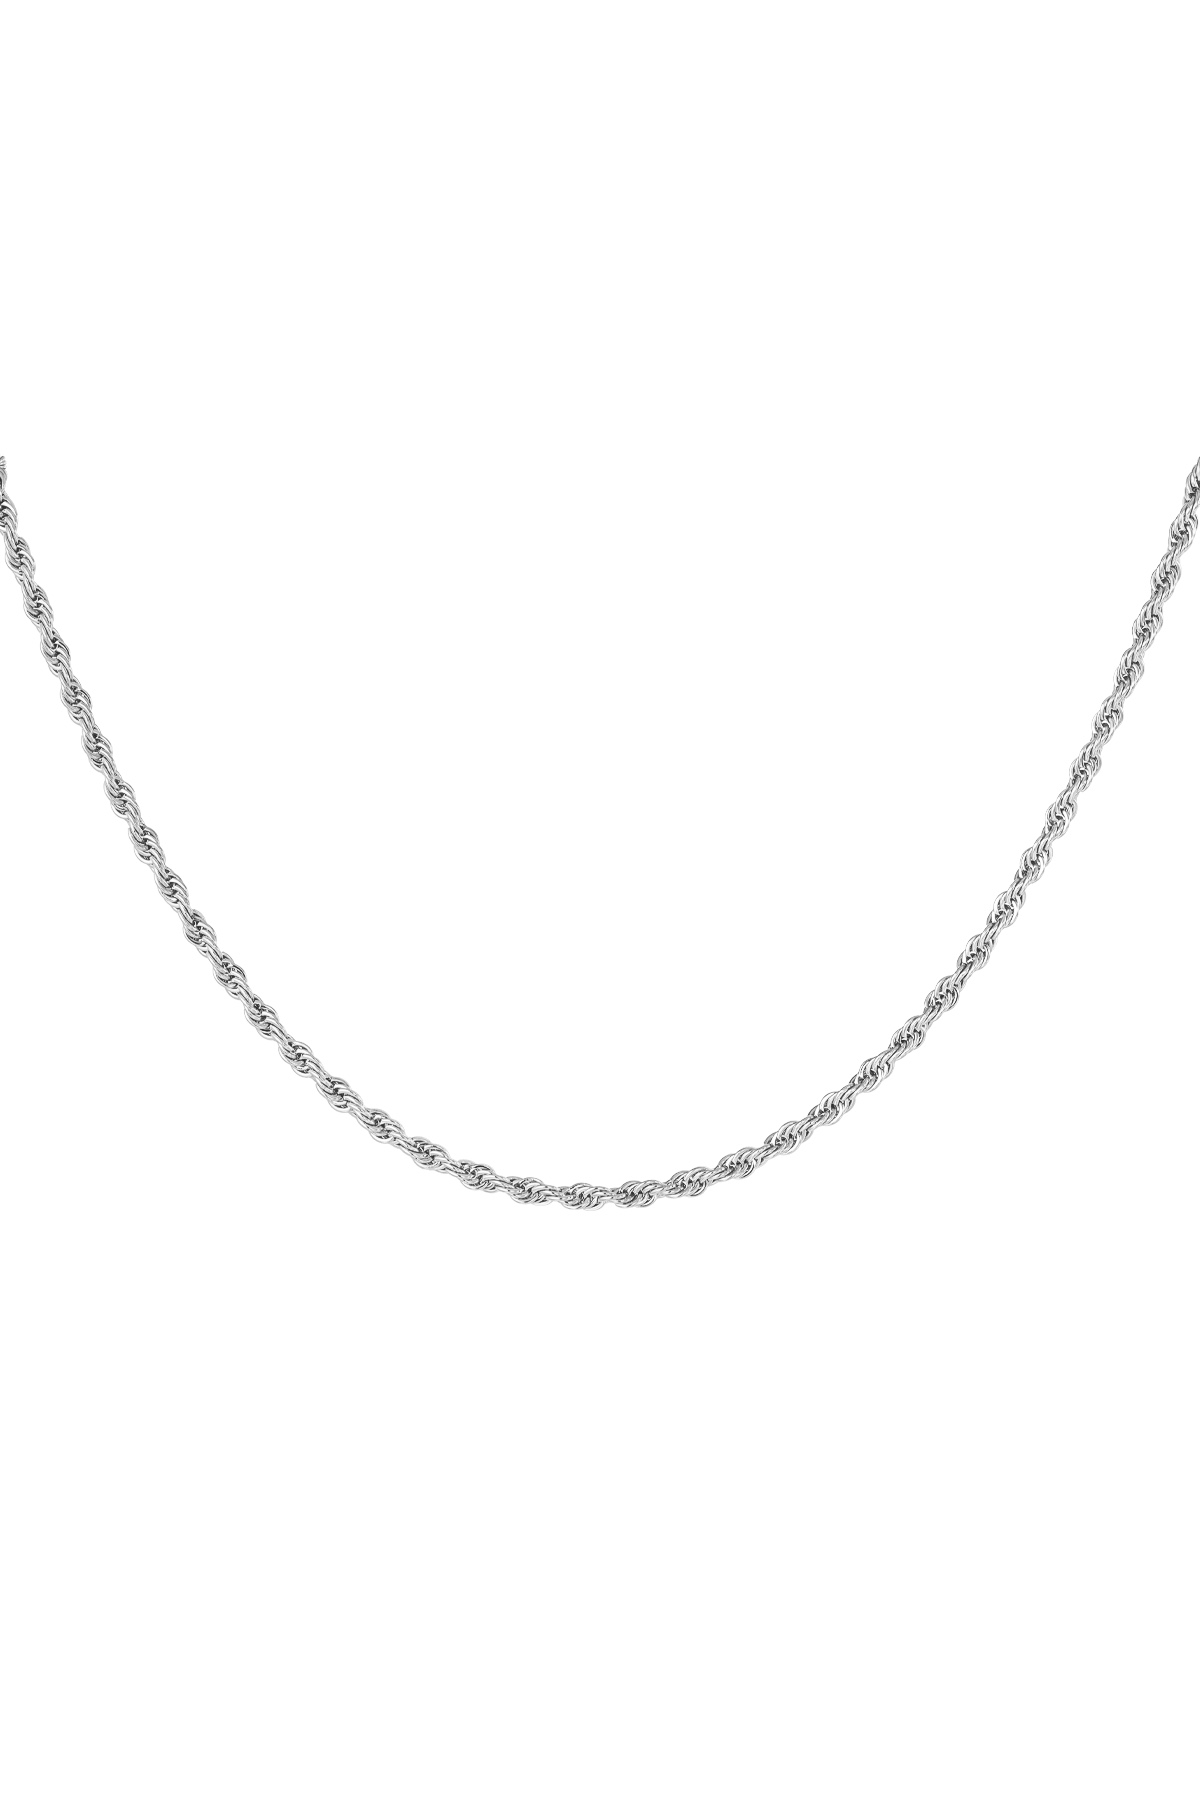 Halskette gedreht kurz - Silber - 3,0 MM 